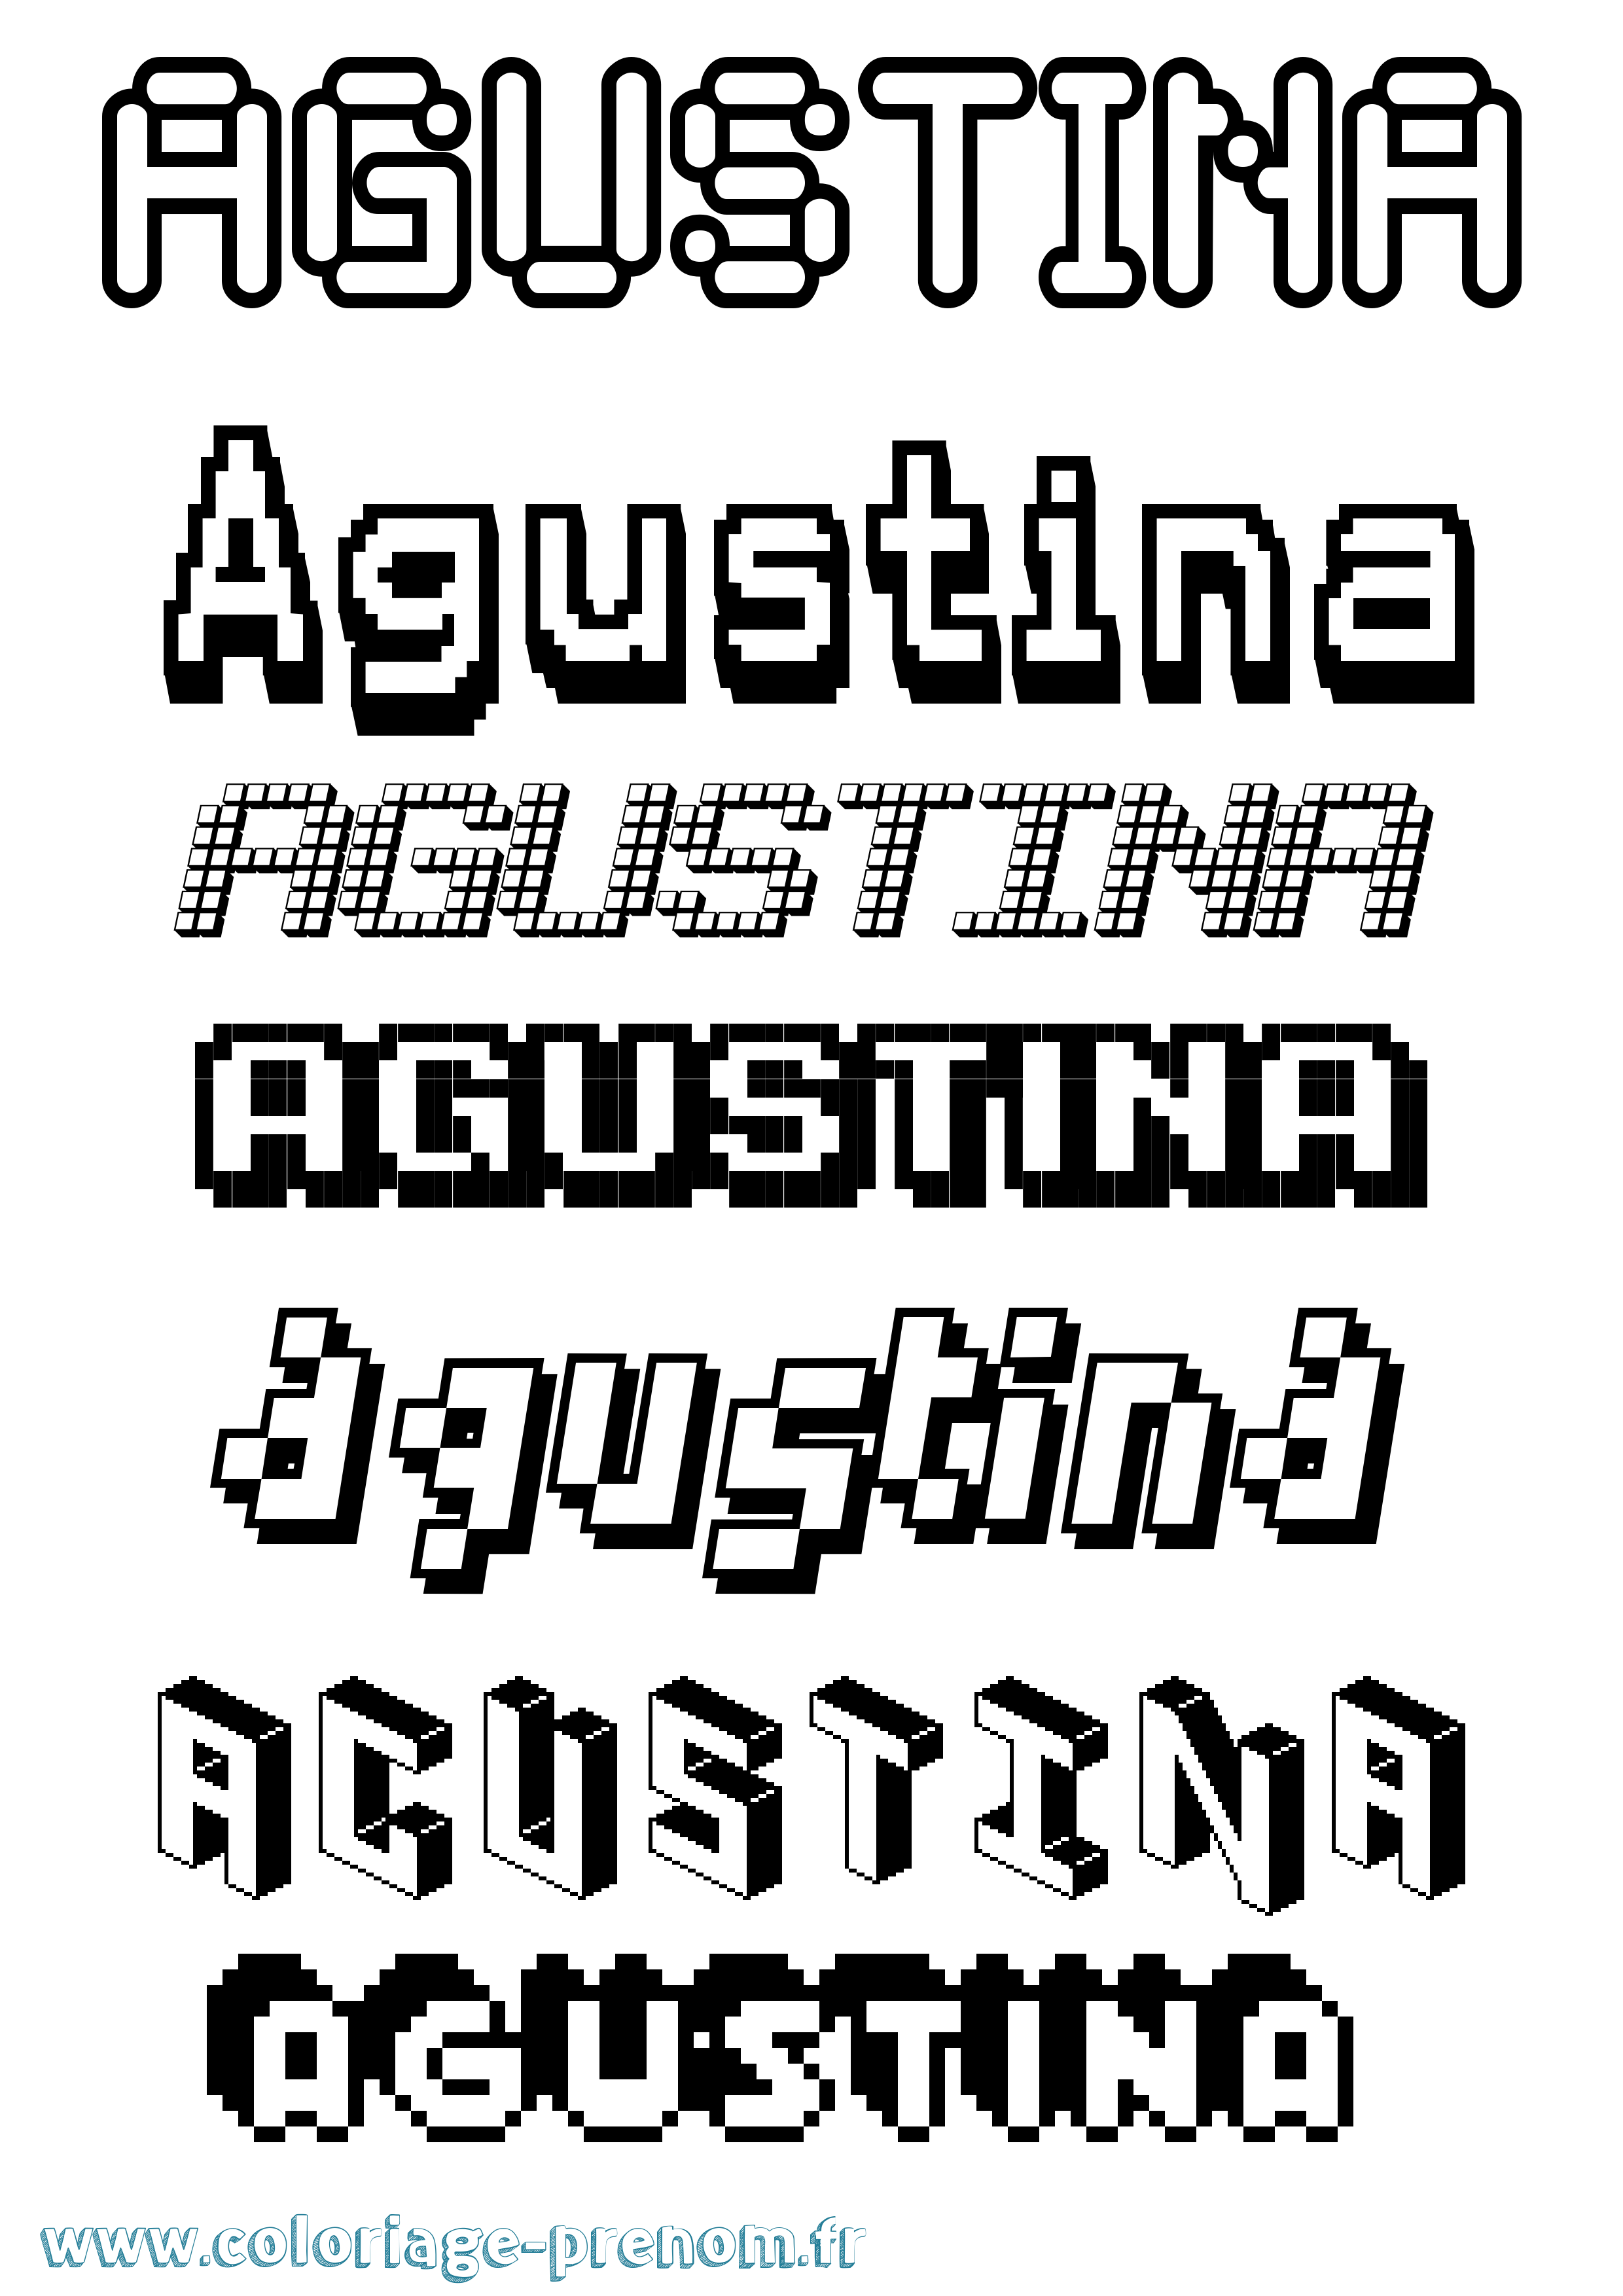 Coloriage prénom Agustina Pixel